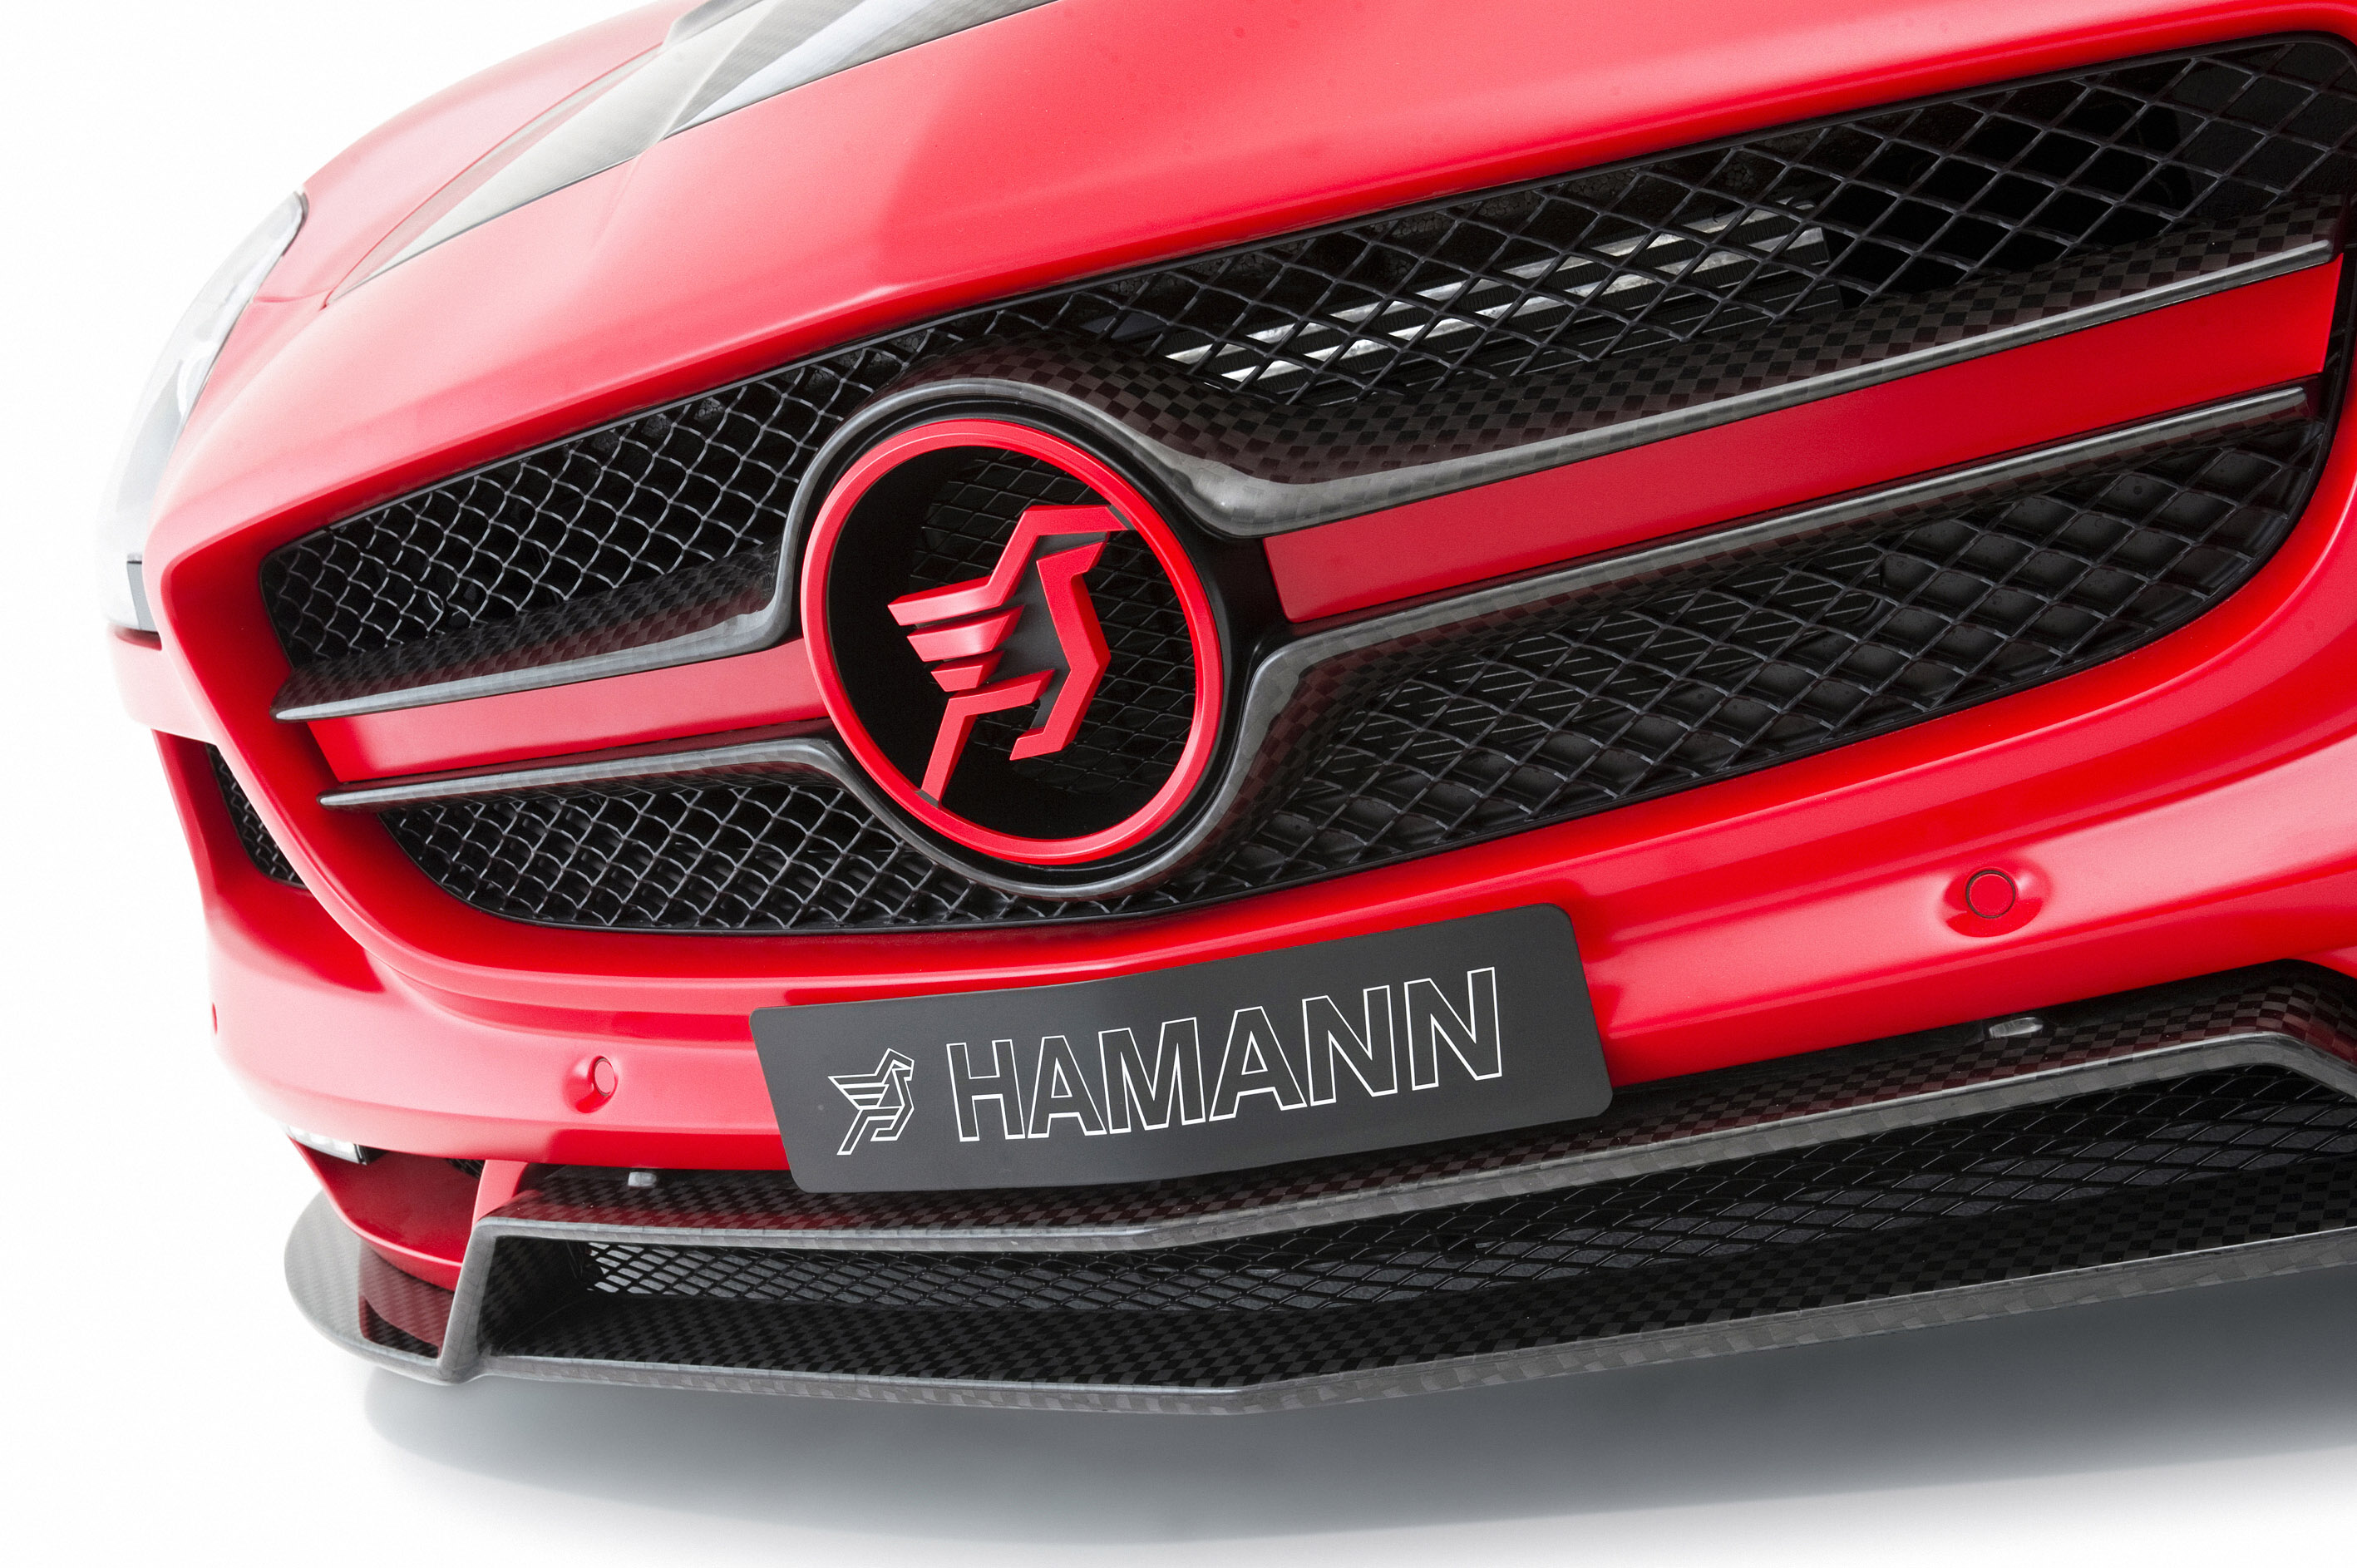 Hamann Hawk Mercedes Sls Roadster Wallpapers